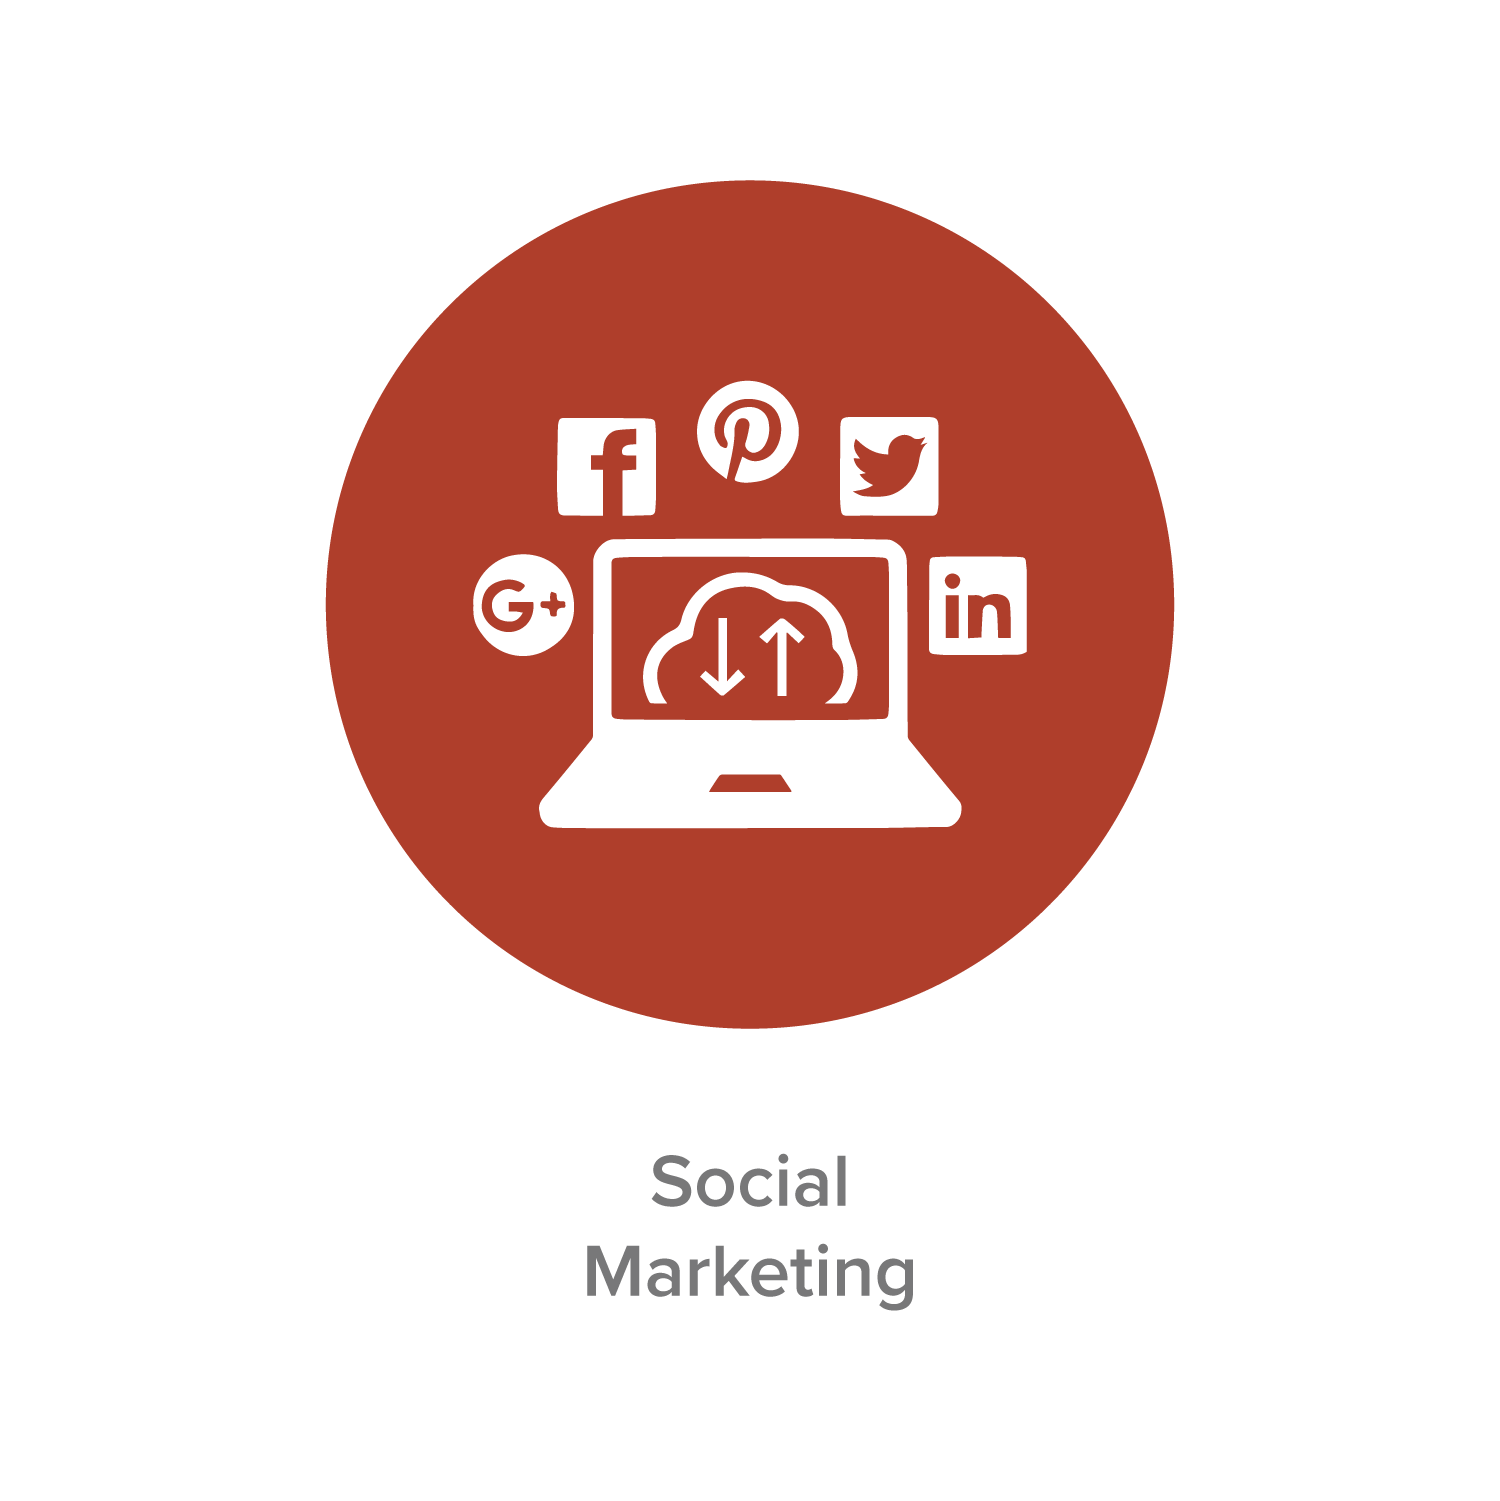 Social Marketing graphic